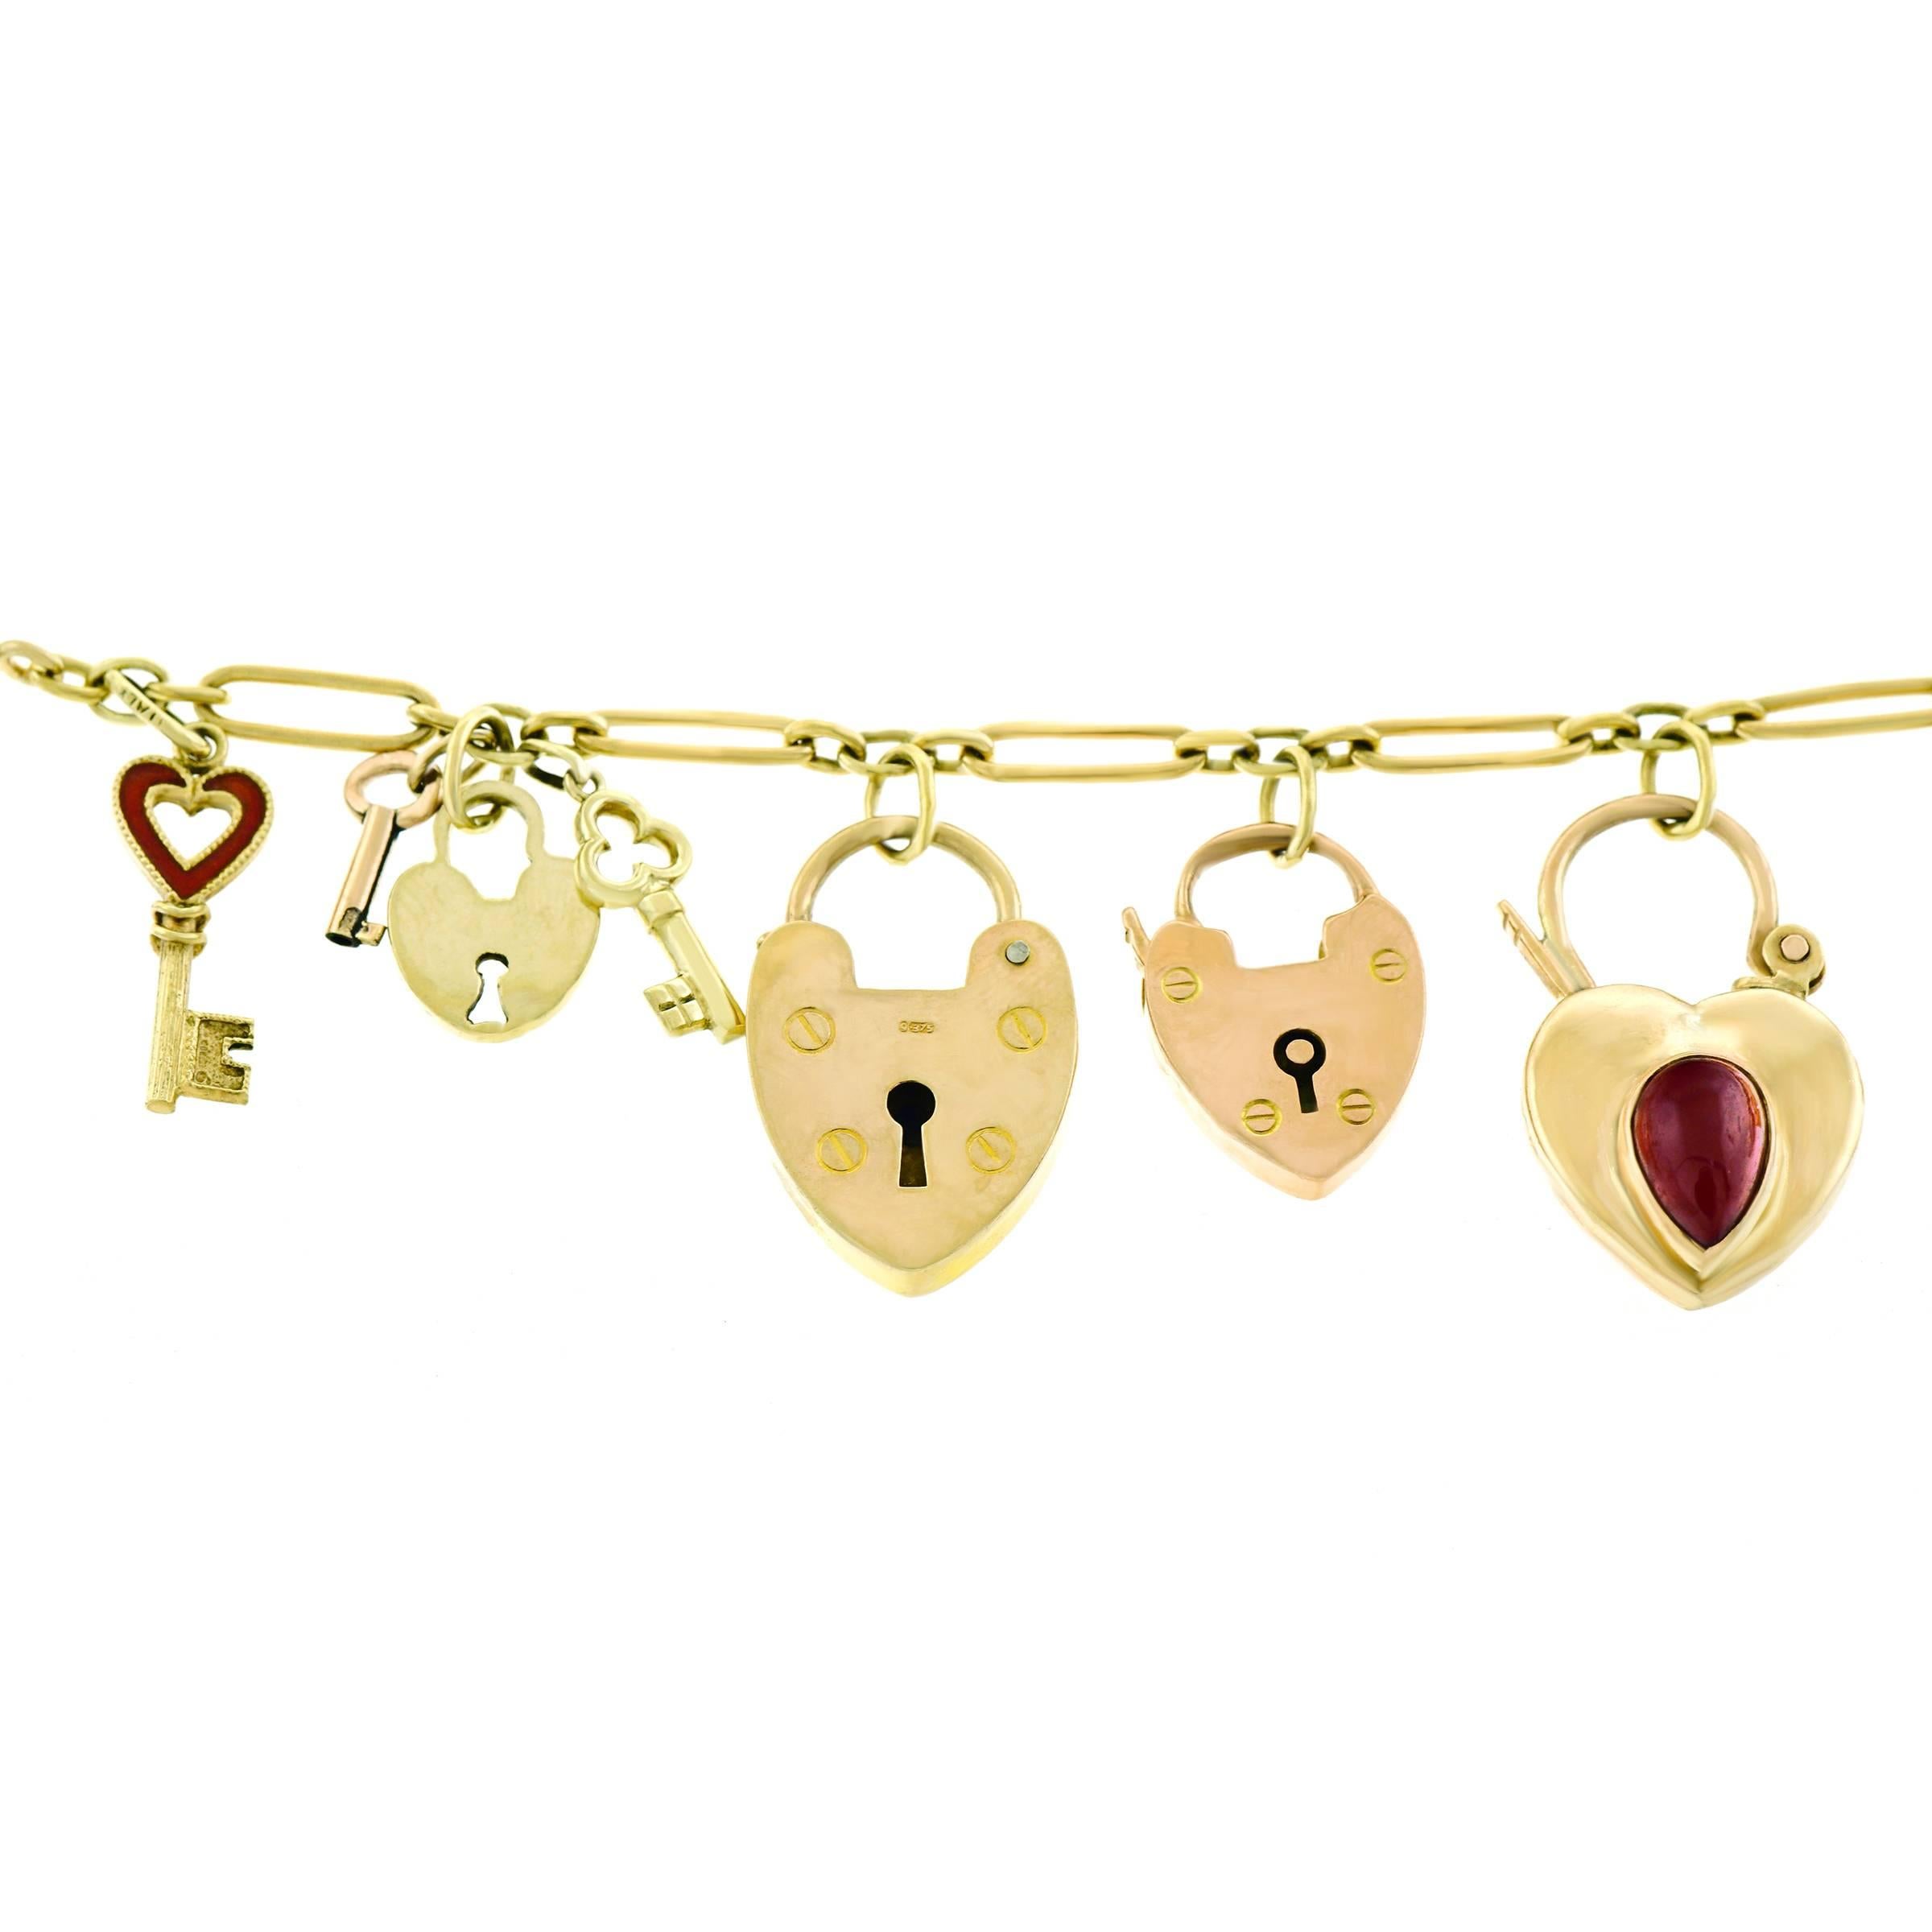 Antique Heart Locks and Keys Gold Charm Bracelet 2